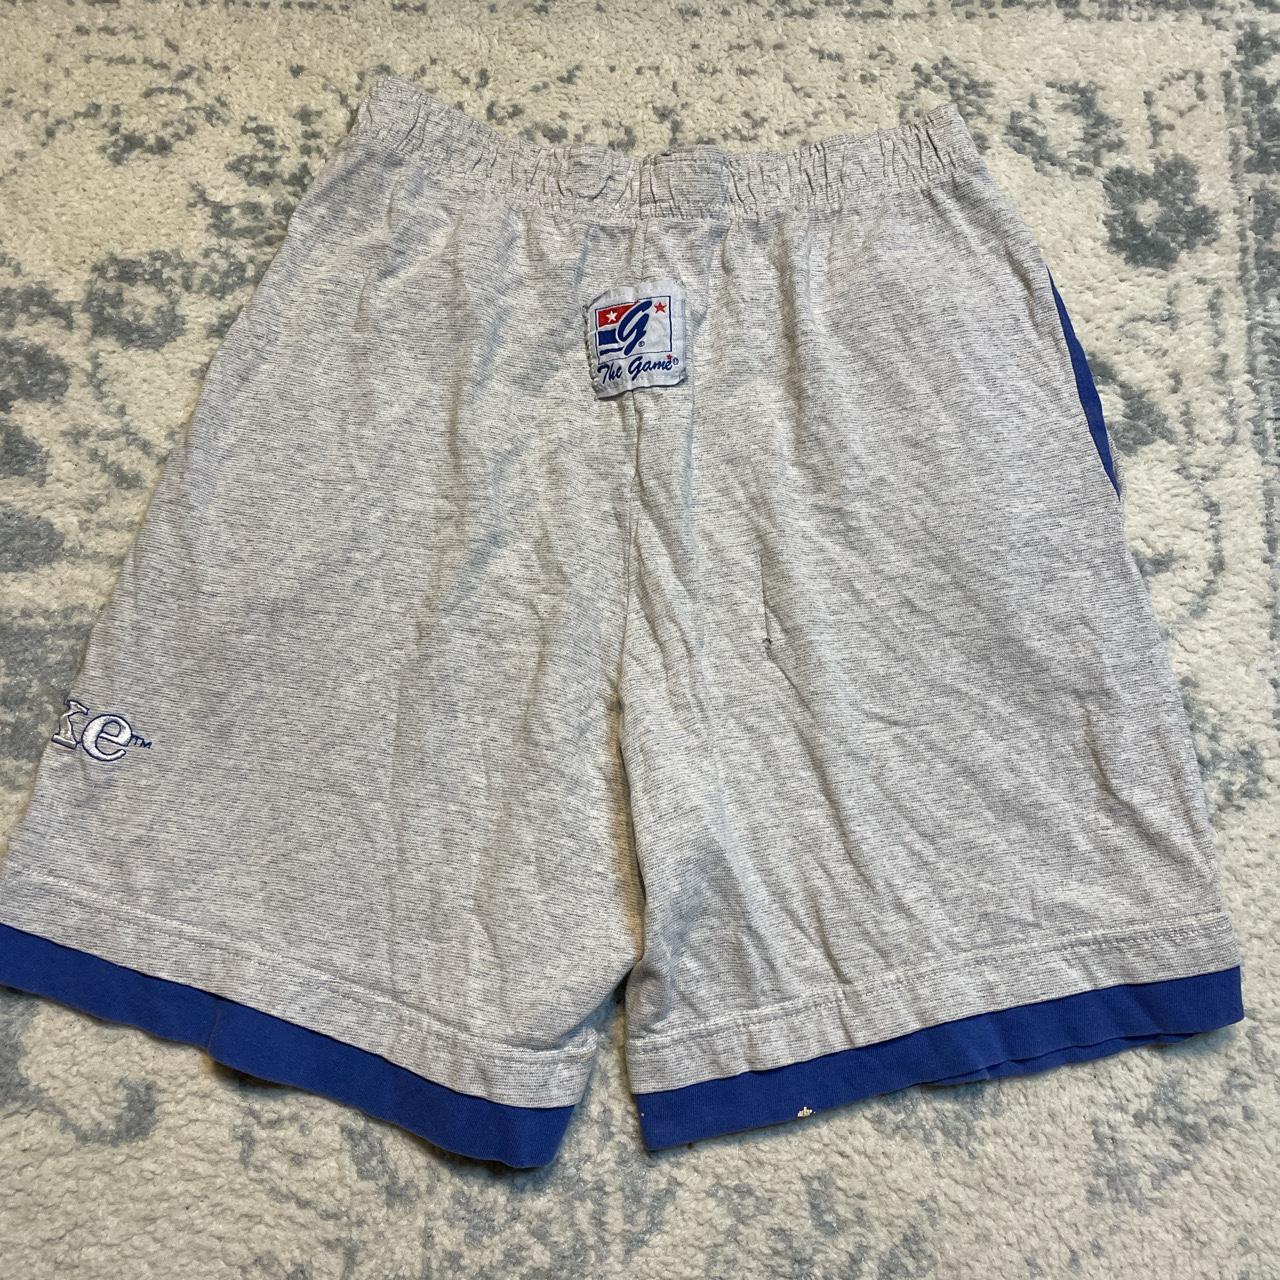 Duke Men's Grey and Blue Shorts (2)